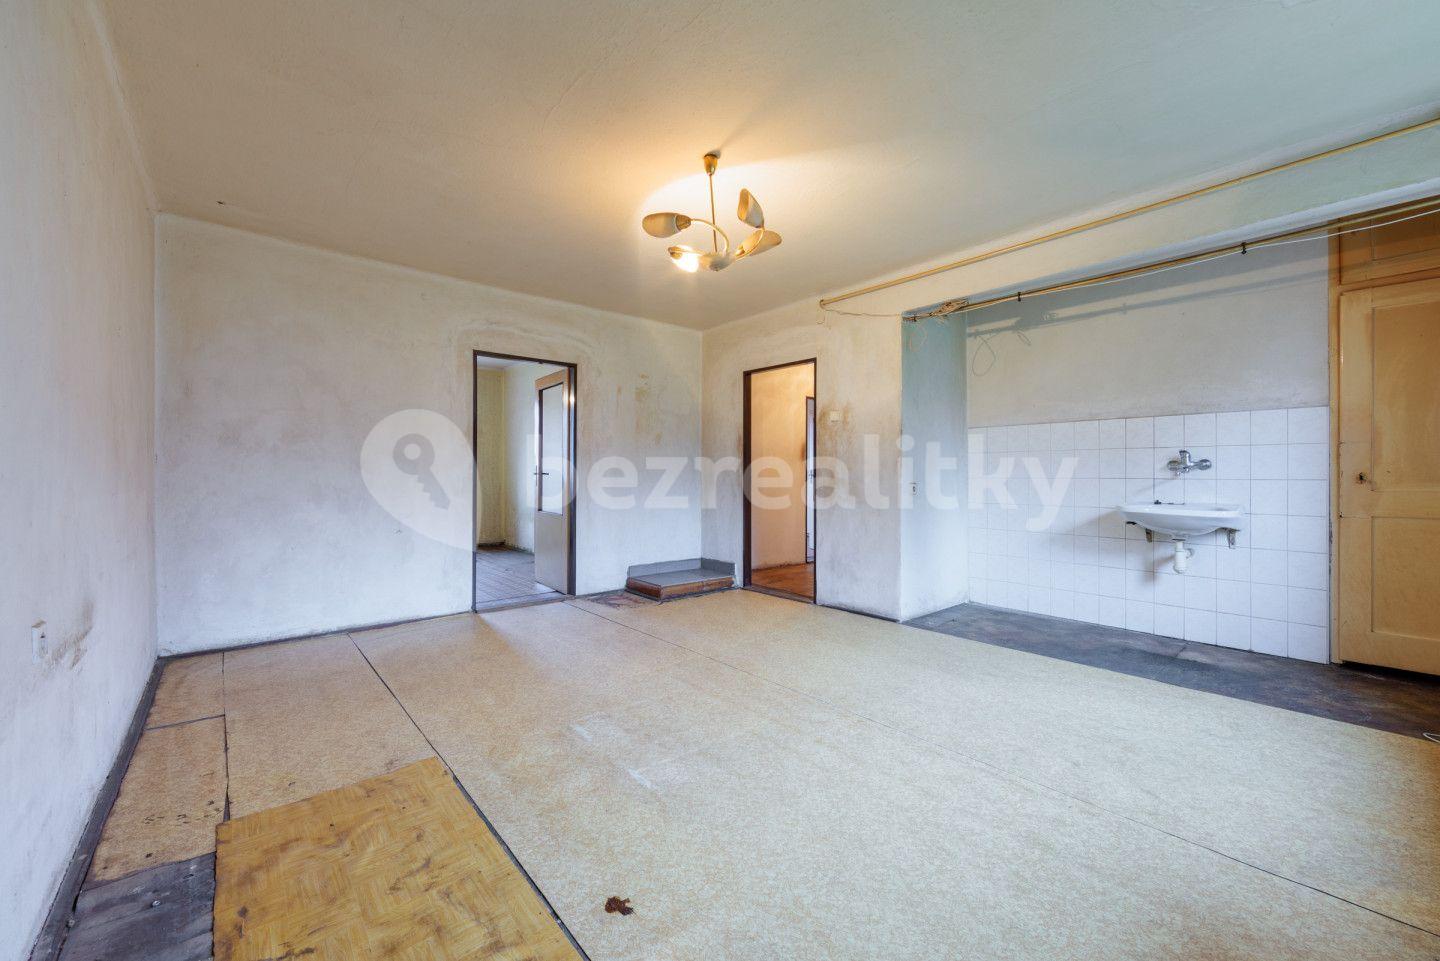 2 bedroom flat for sale, 65 m², Hornická, Lomnice, Karlovarský Region